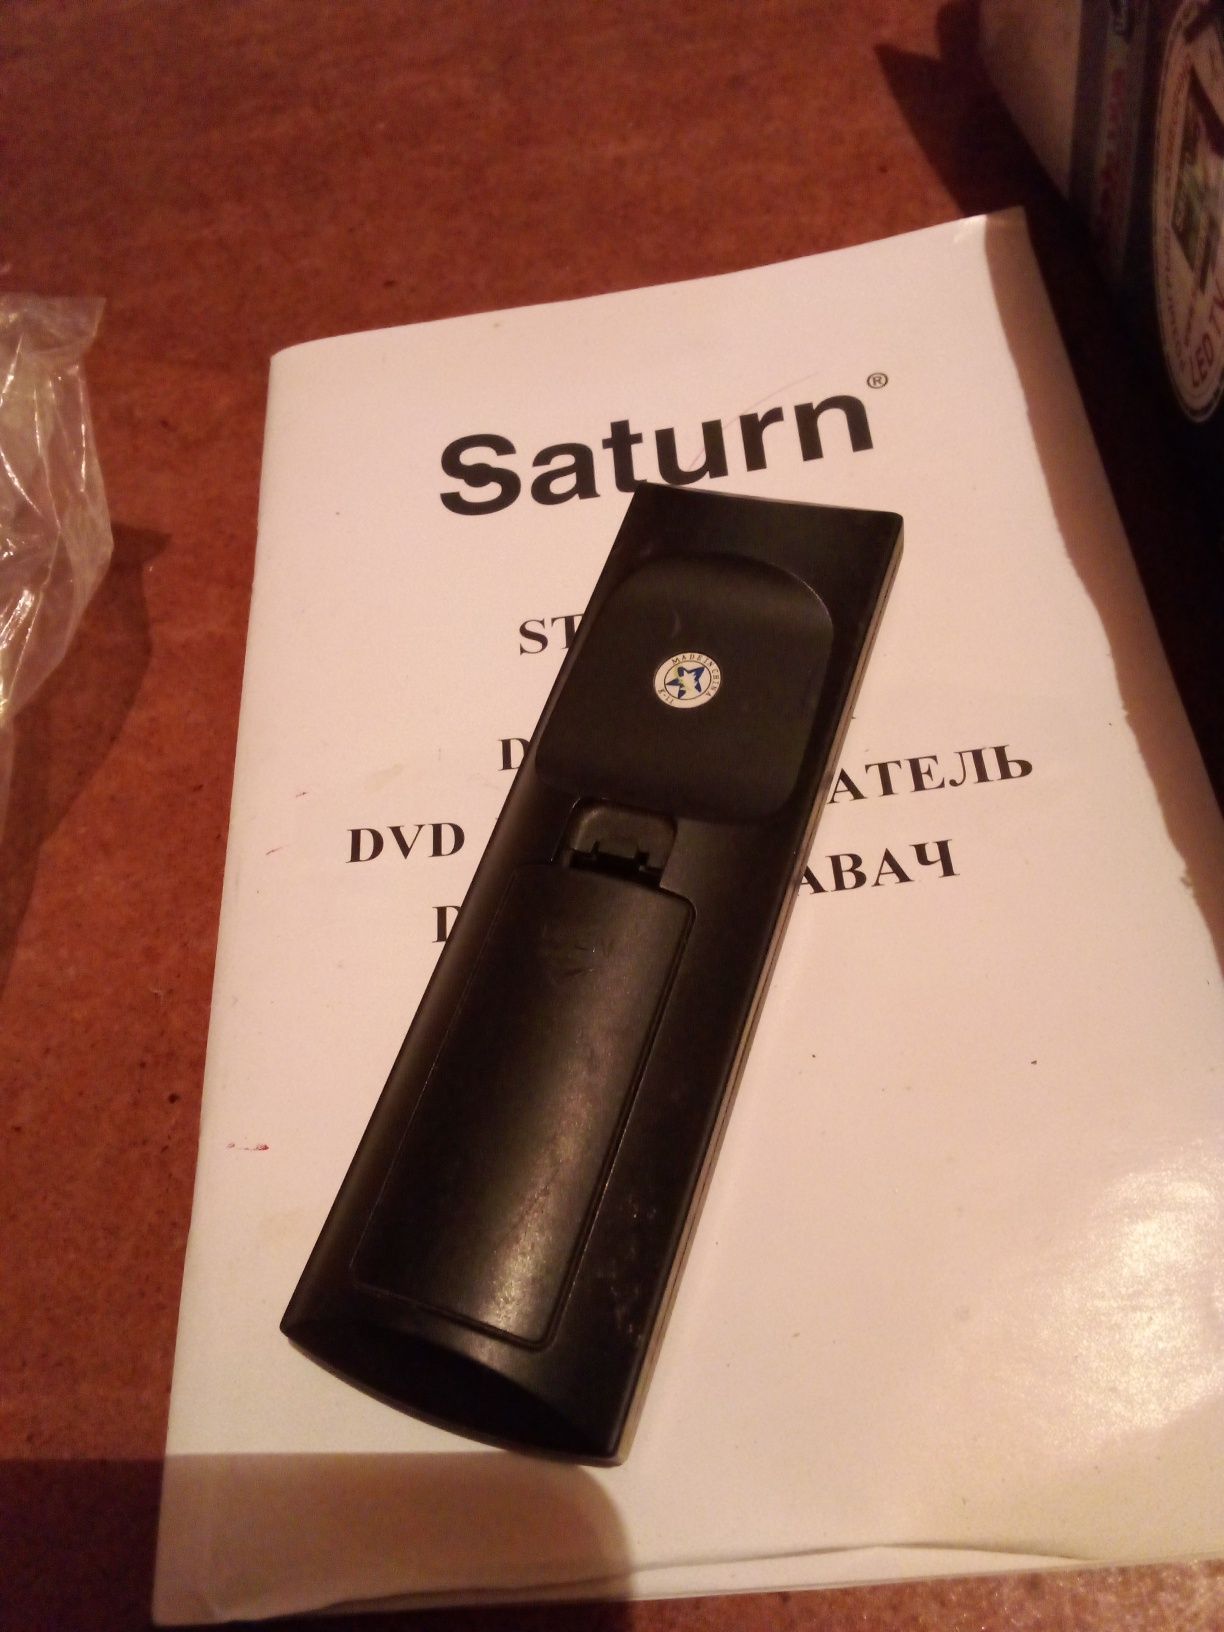 DVD Player Saturn ST-DV7731